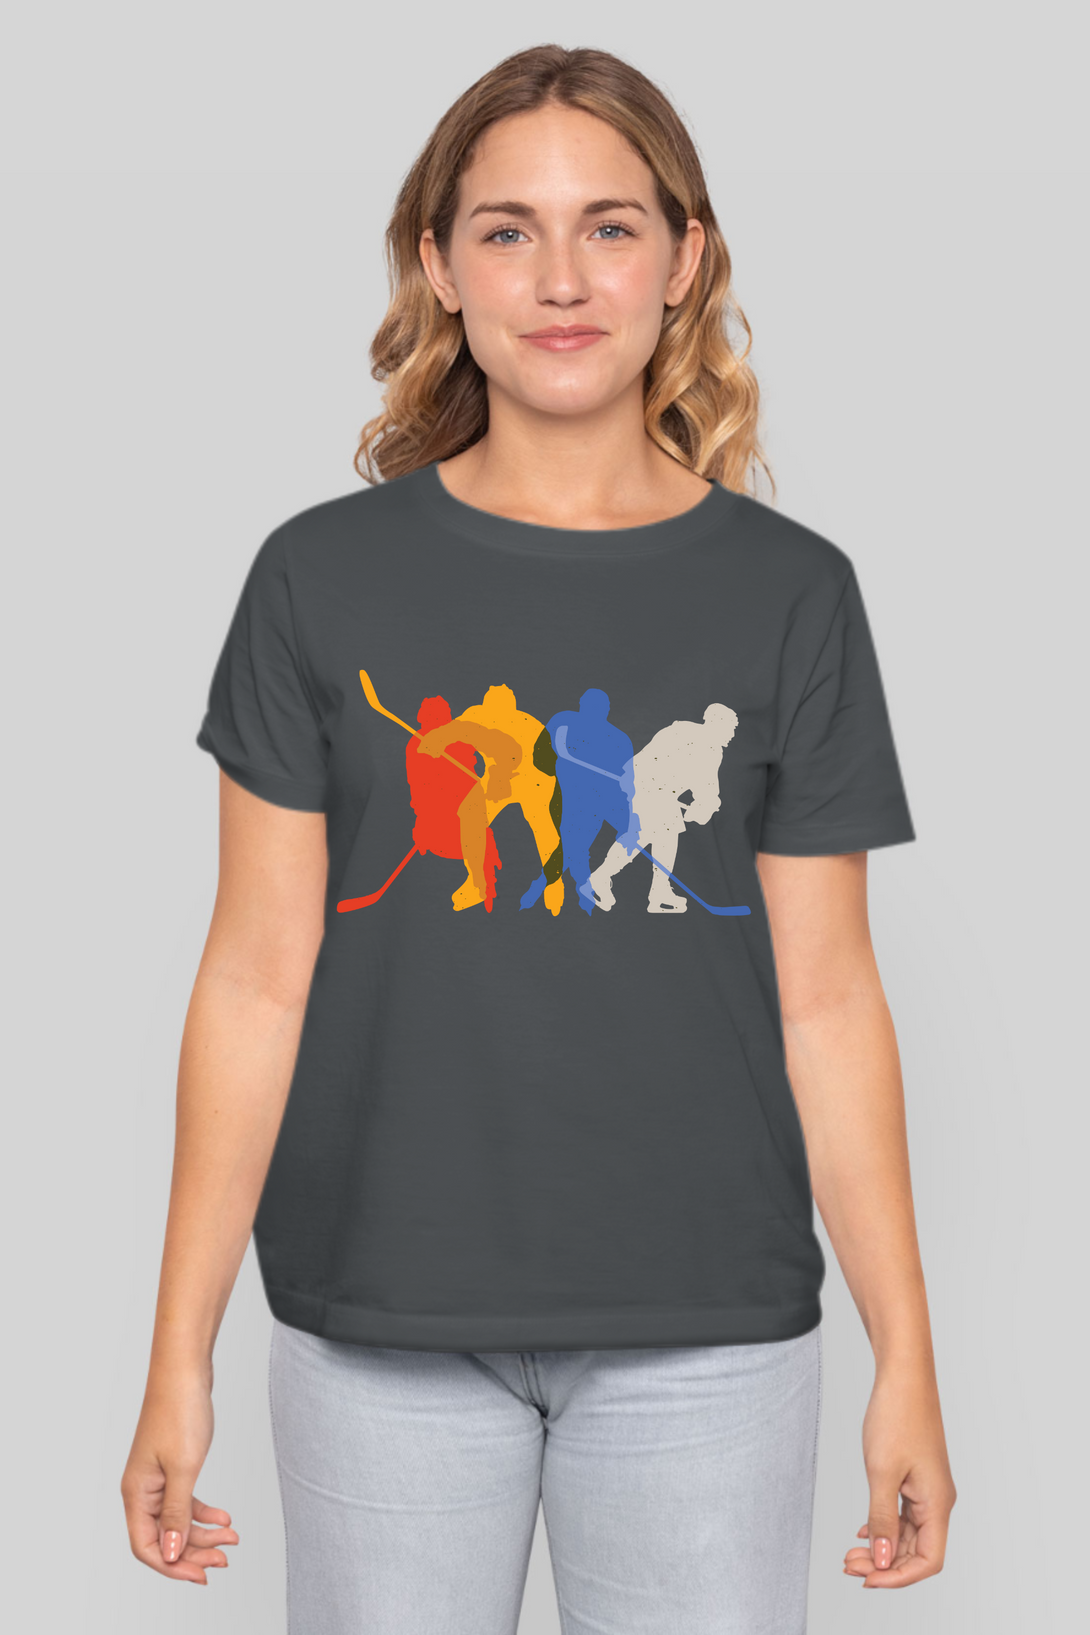 Hockey Players Printed T-Shirt For Women - WowWaves - 5